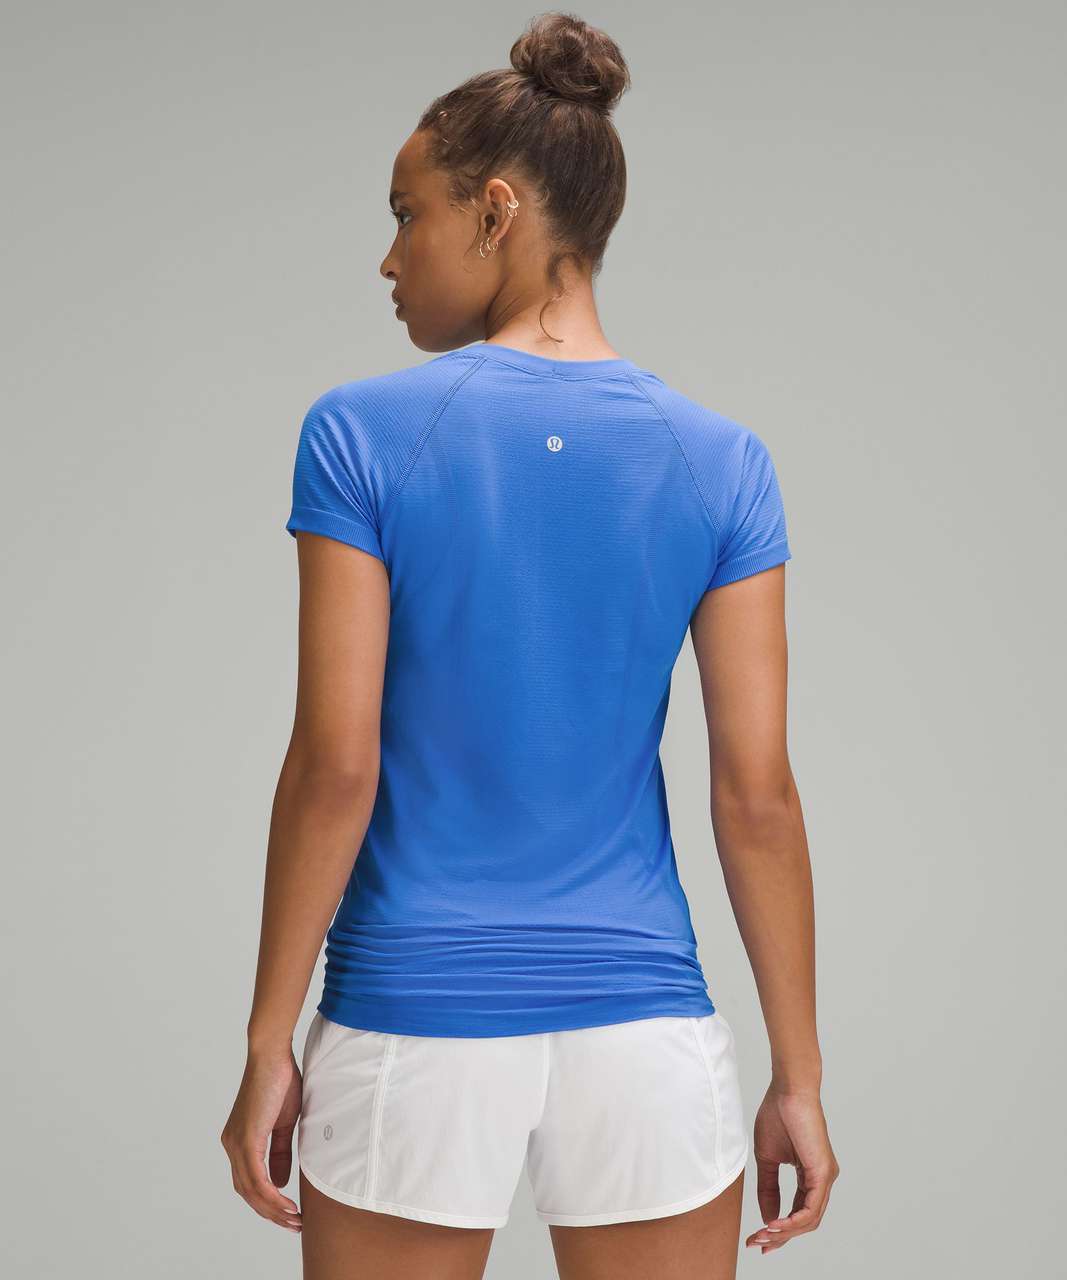 Lululemon Swiftly Tech Short-Sleeve Shirt 2.0 - Pipe Dream Blue / Pipe Dream Blue